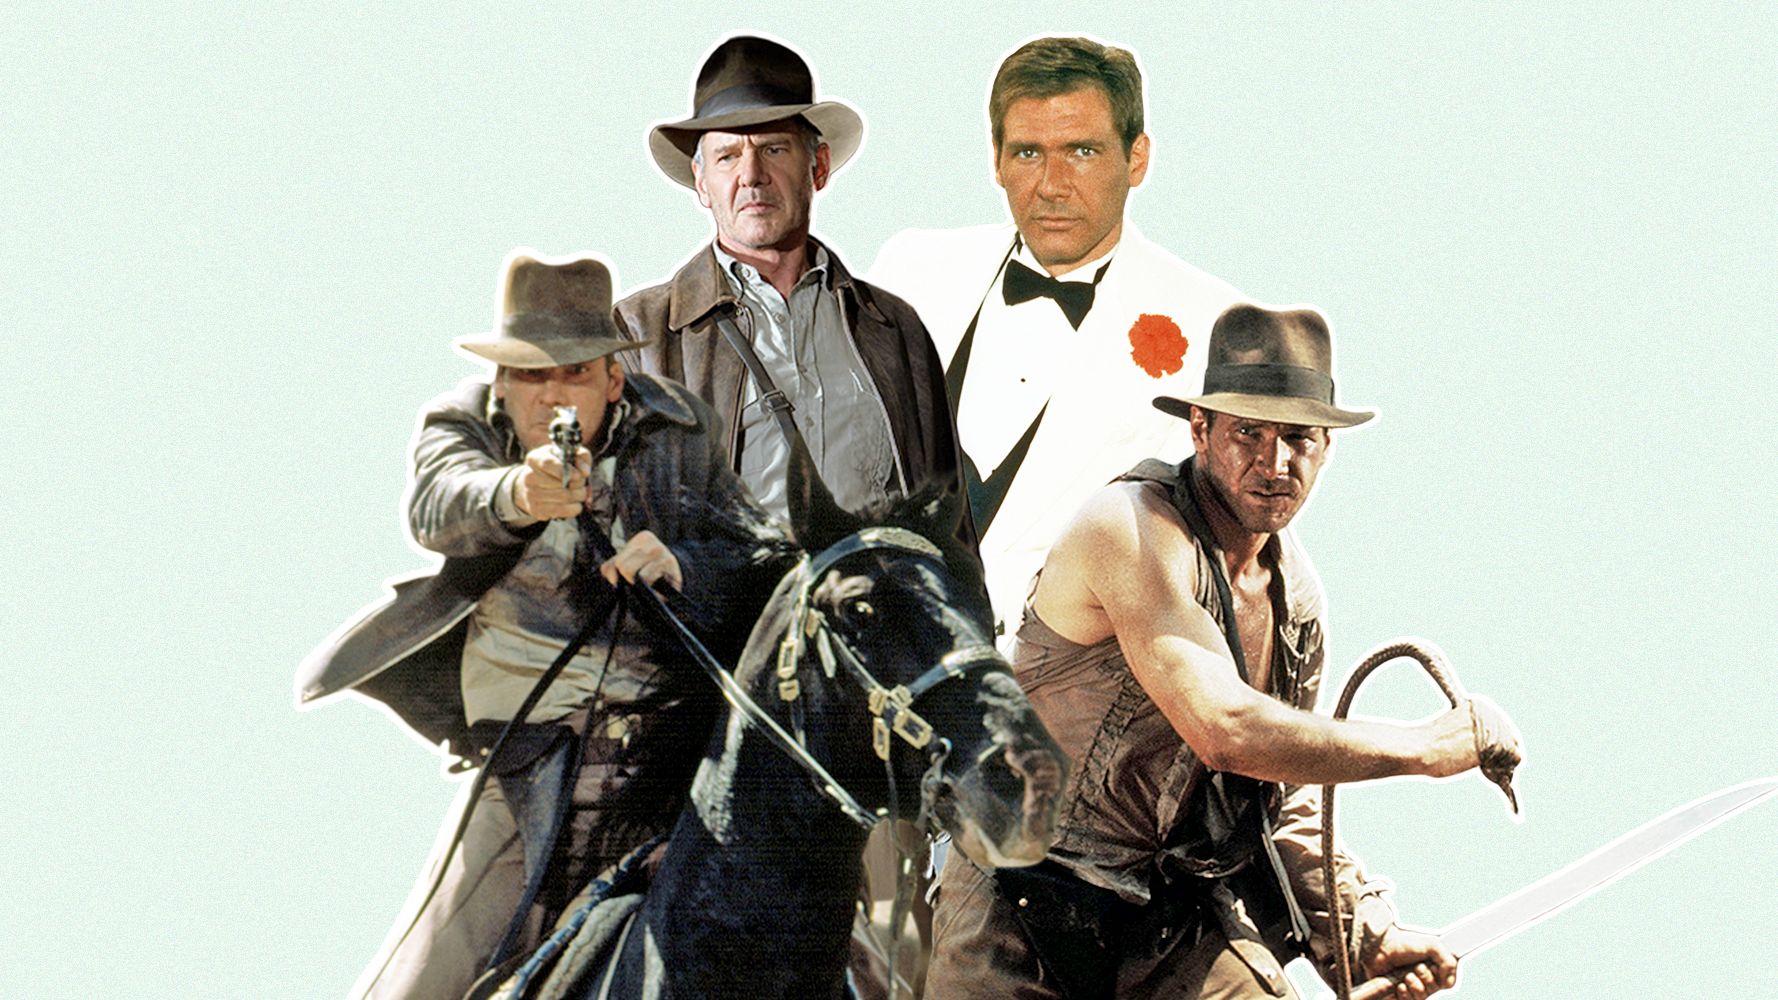 Indiana Jones' Movies in Order - How to Stream The 'Indiana Jones